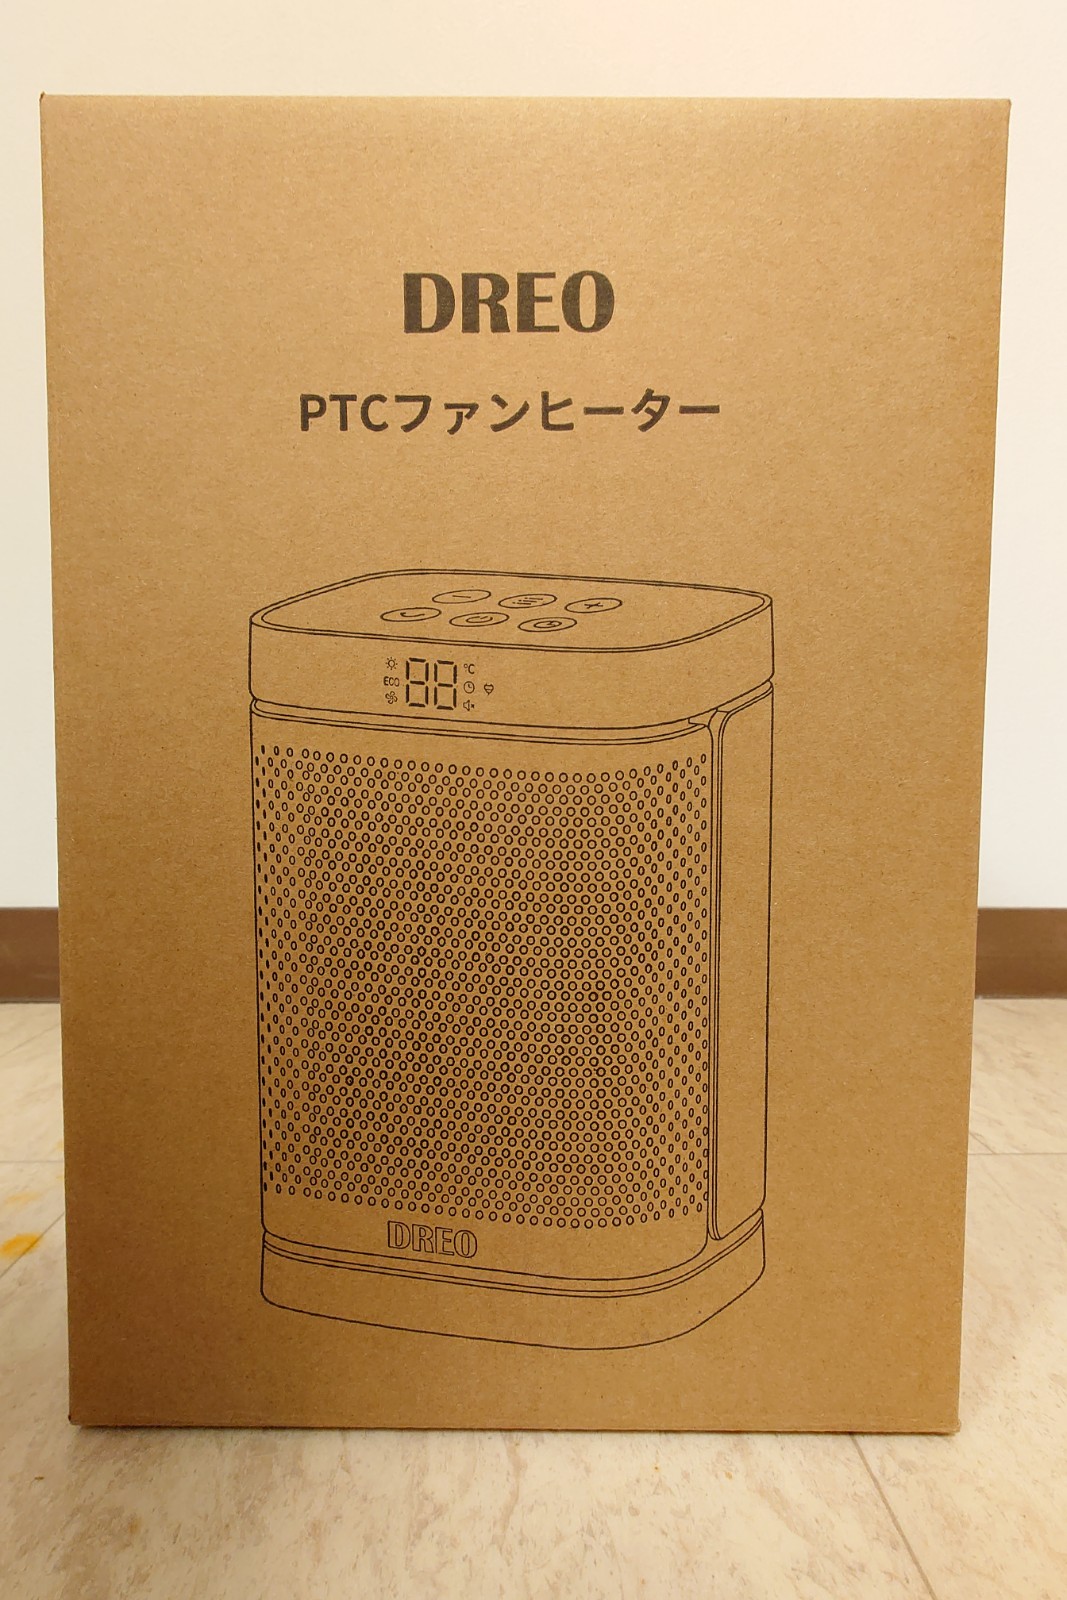 Dreoセラミックヒーター(dreo-dr-hsh004)